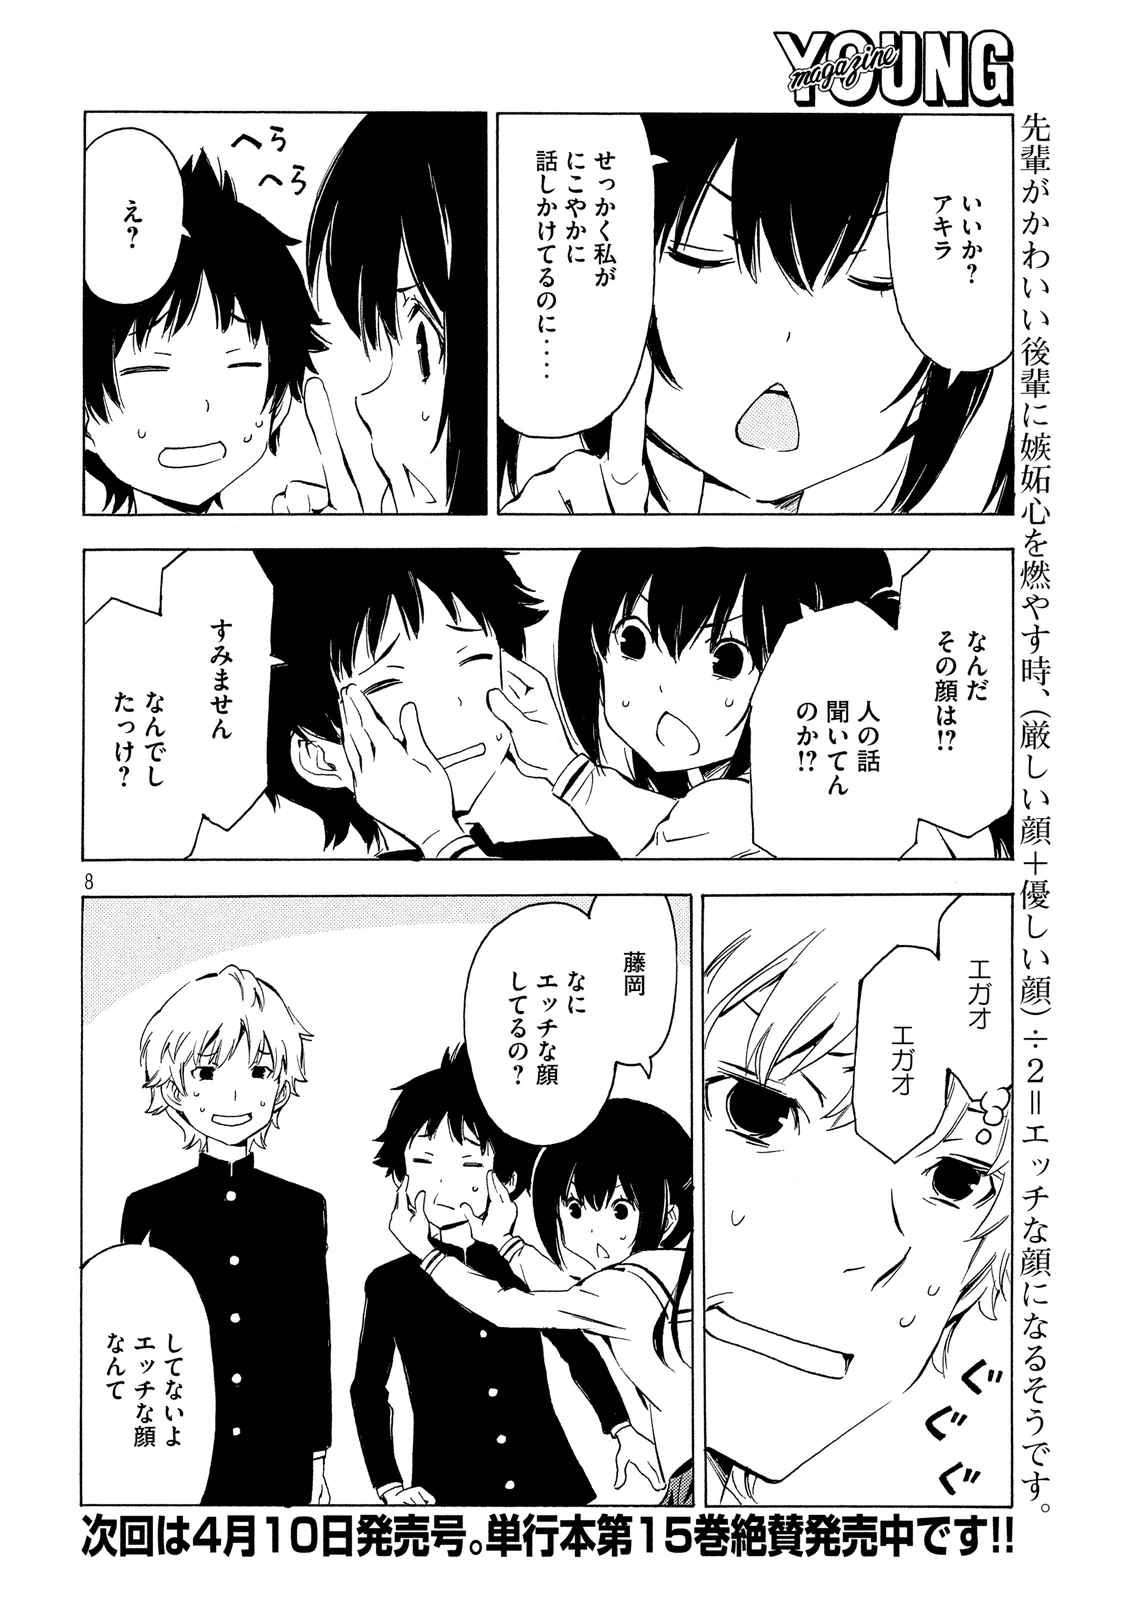 Minami-ke - Chapter 313 - Page 8